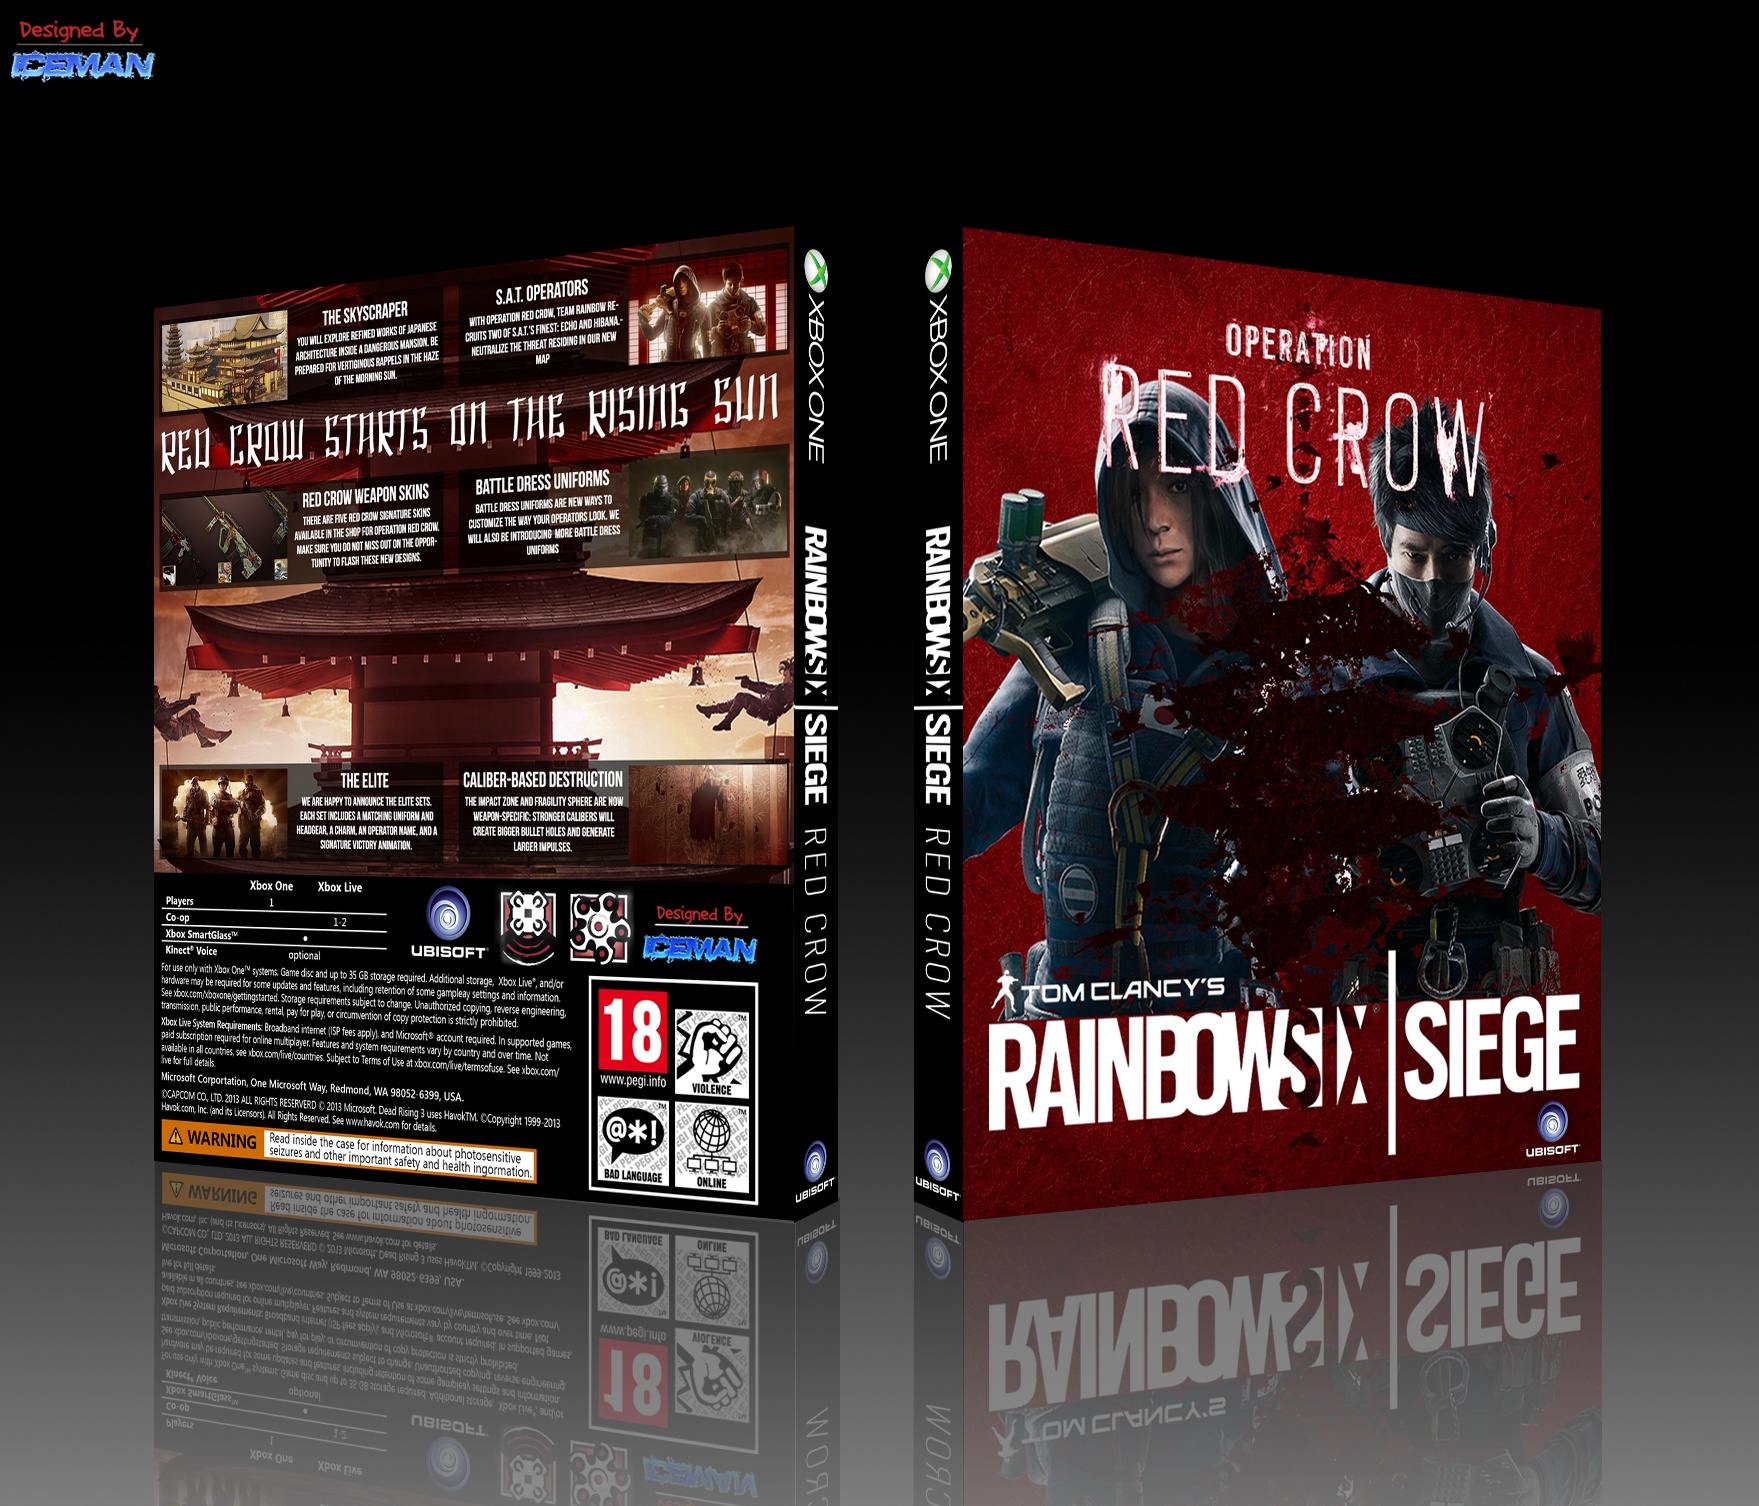 Tom Clancy's Rainbow Six: Siege box cover